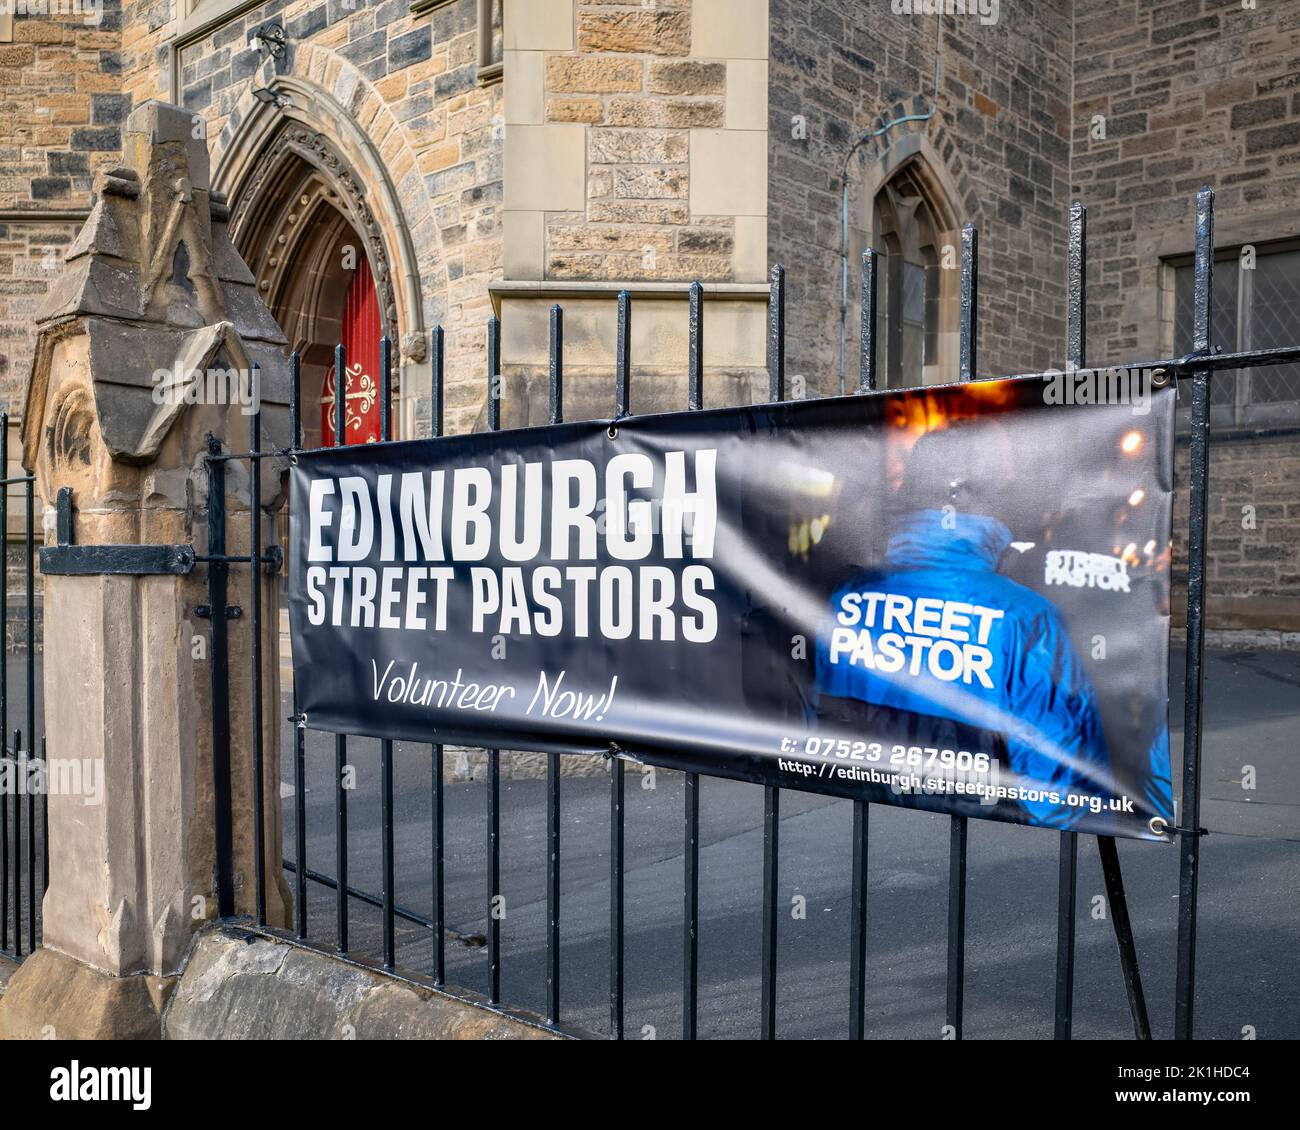 Edinburgh Street Pastors sign, Buccleuch and Greyfriars Free Church of Scotland, West Crosscausway, Edinburgh, Scotland, UK. Stock Photo